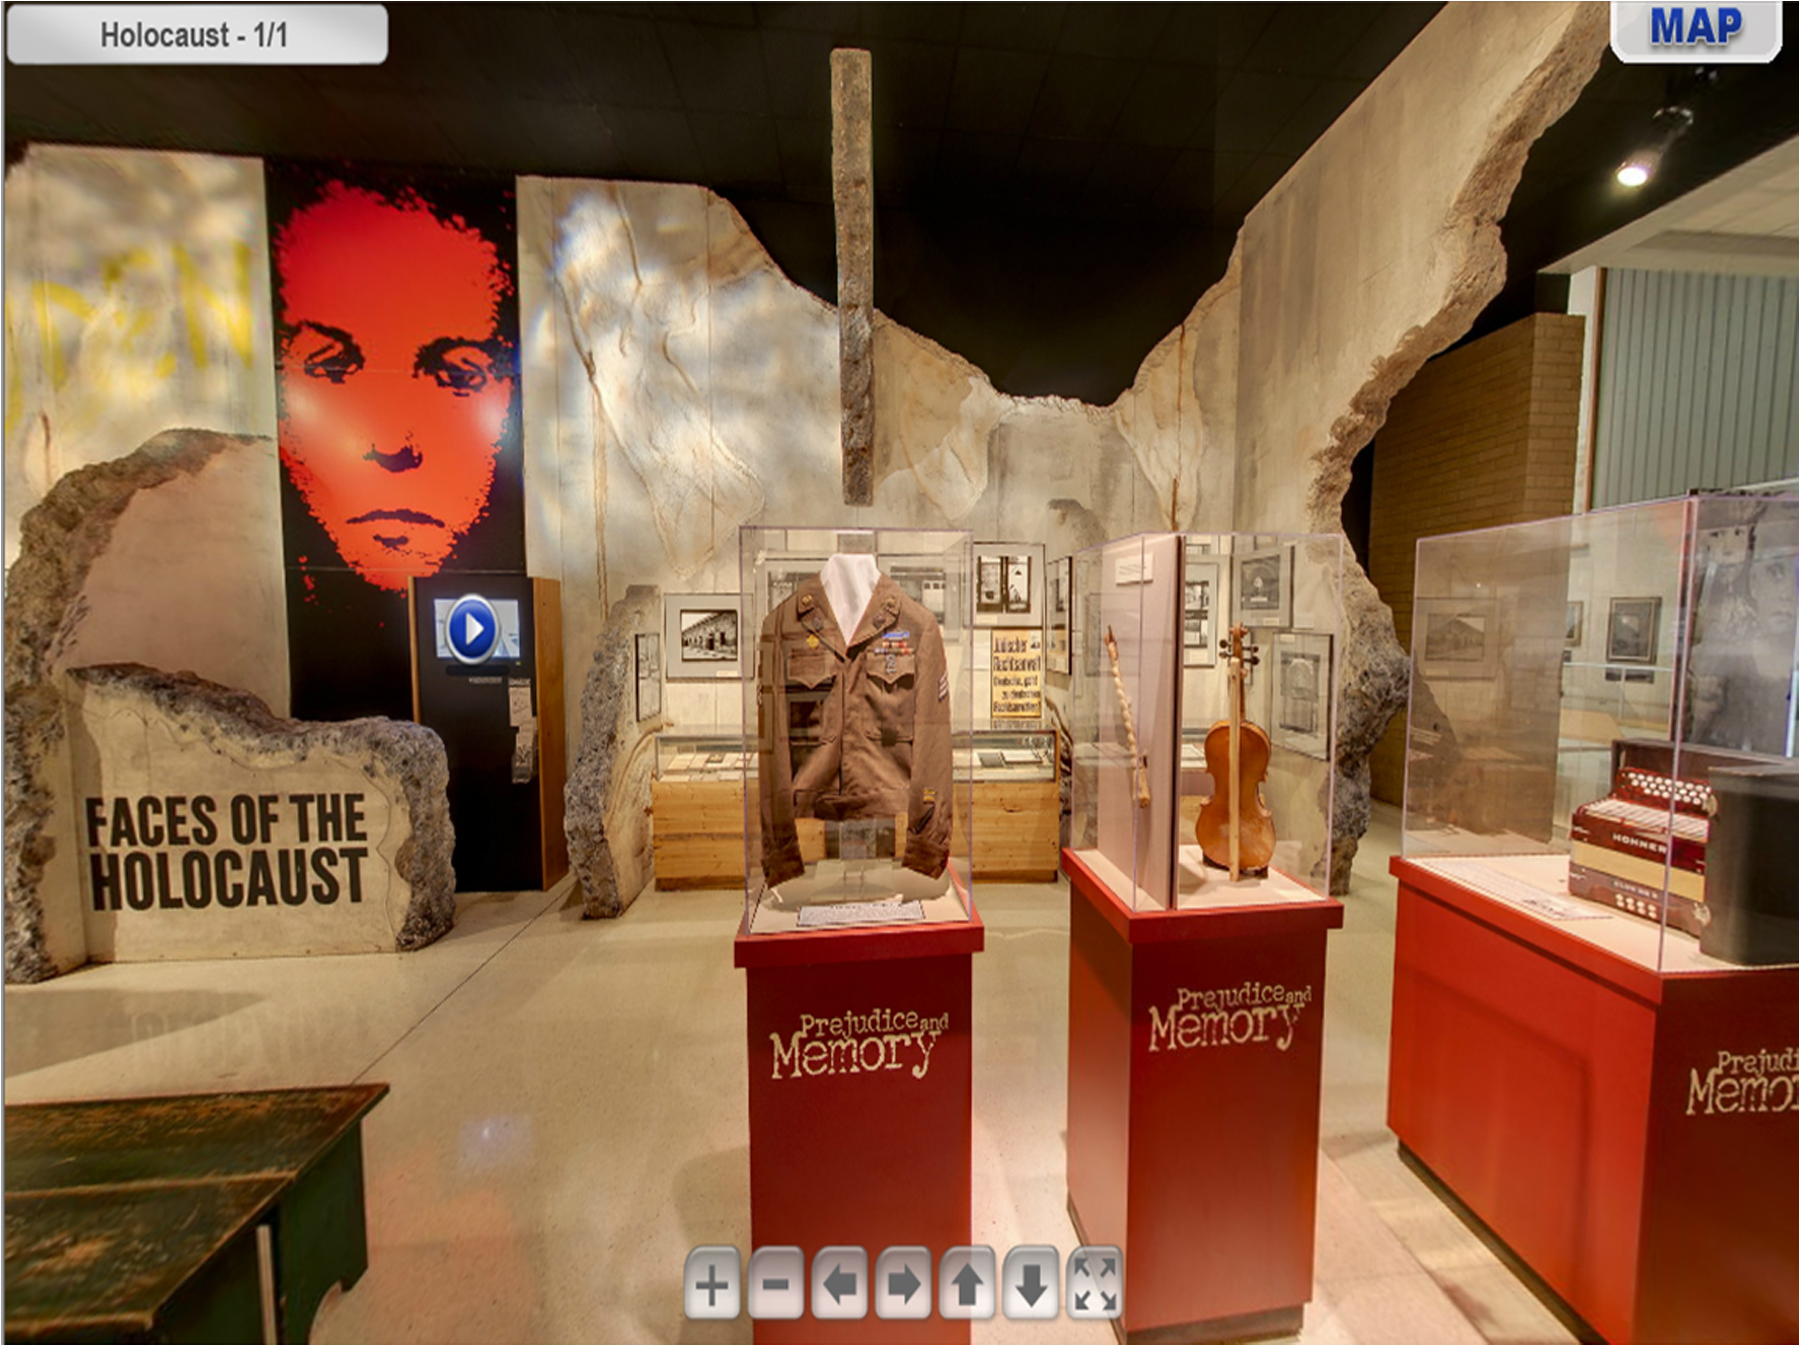 virtual museum tours world war 2